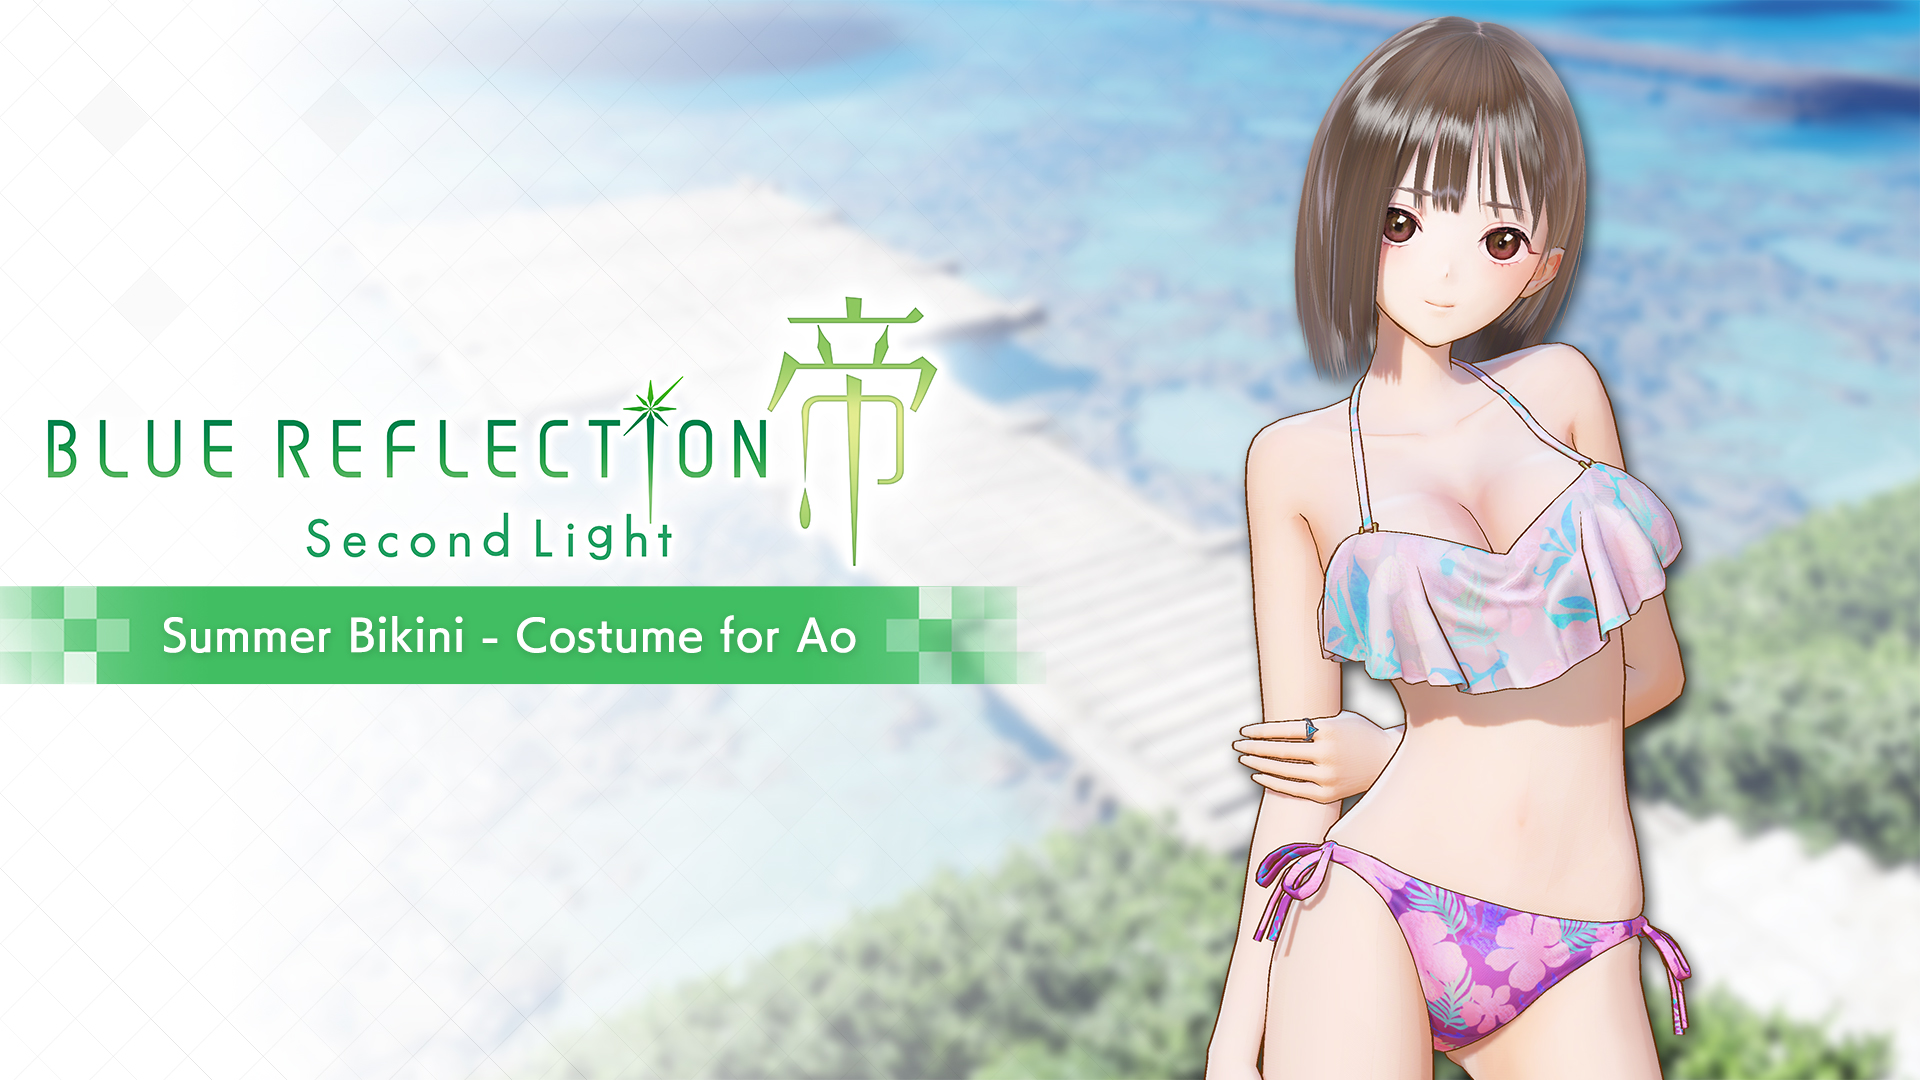 Summer Bikini - Costume for Ao